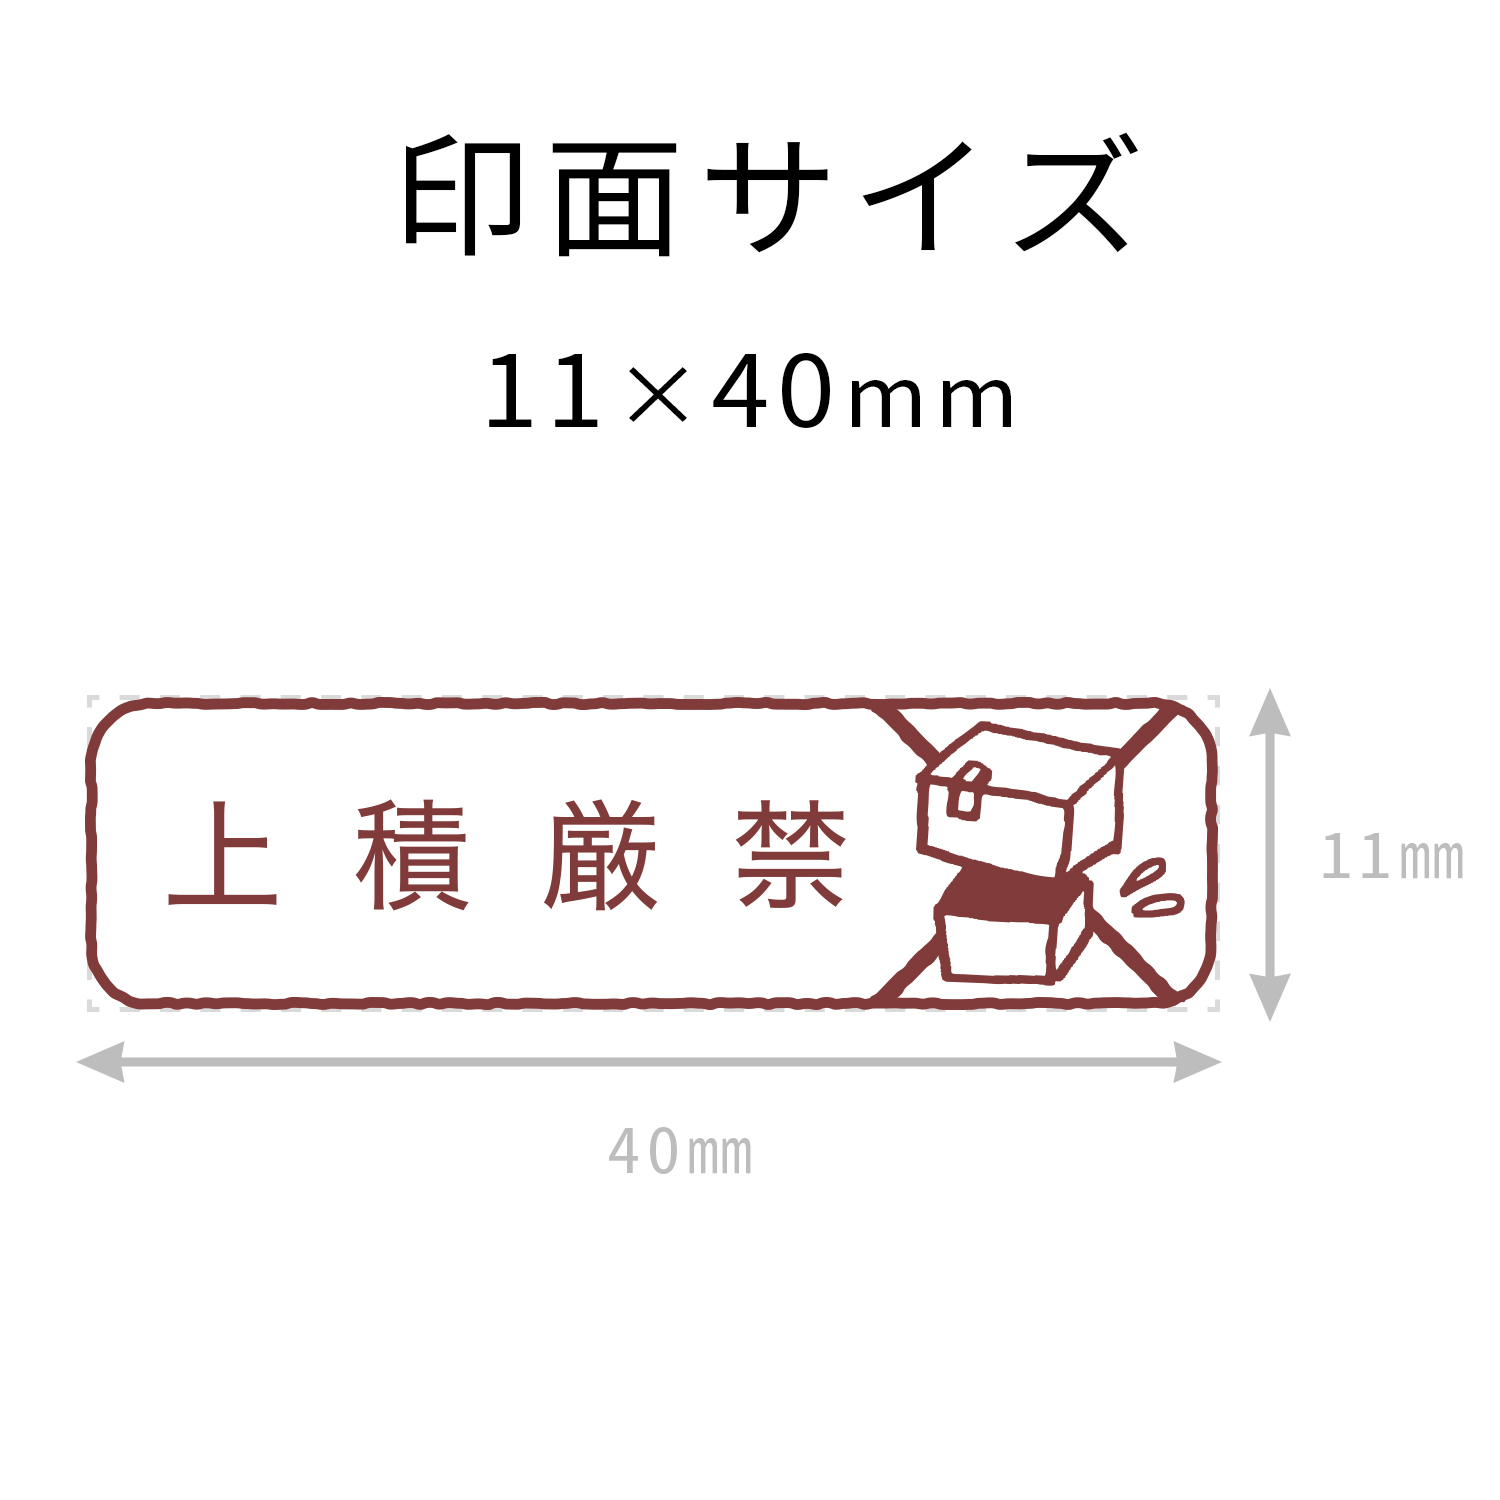 OKURO Sサイズ 茶 上積厳禁|PEO-SA-BR-07|商品カタログ|シヤチハタ株式会社